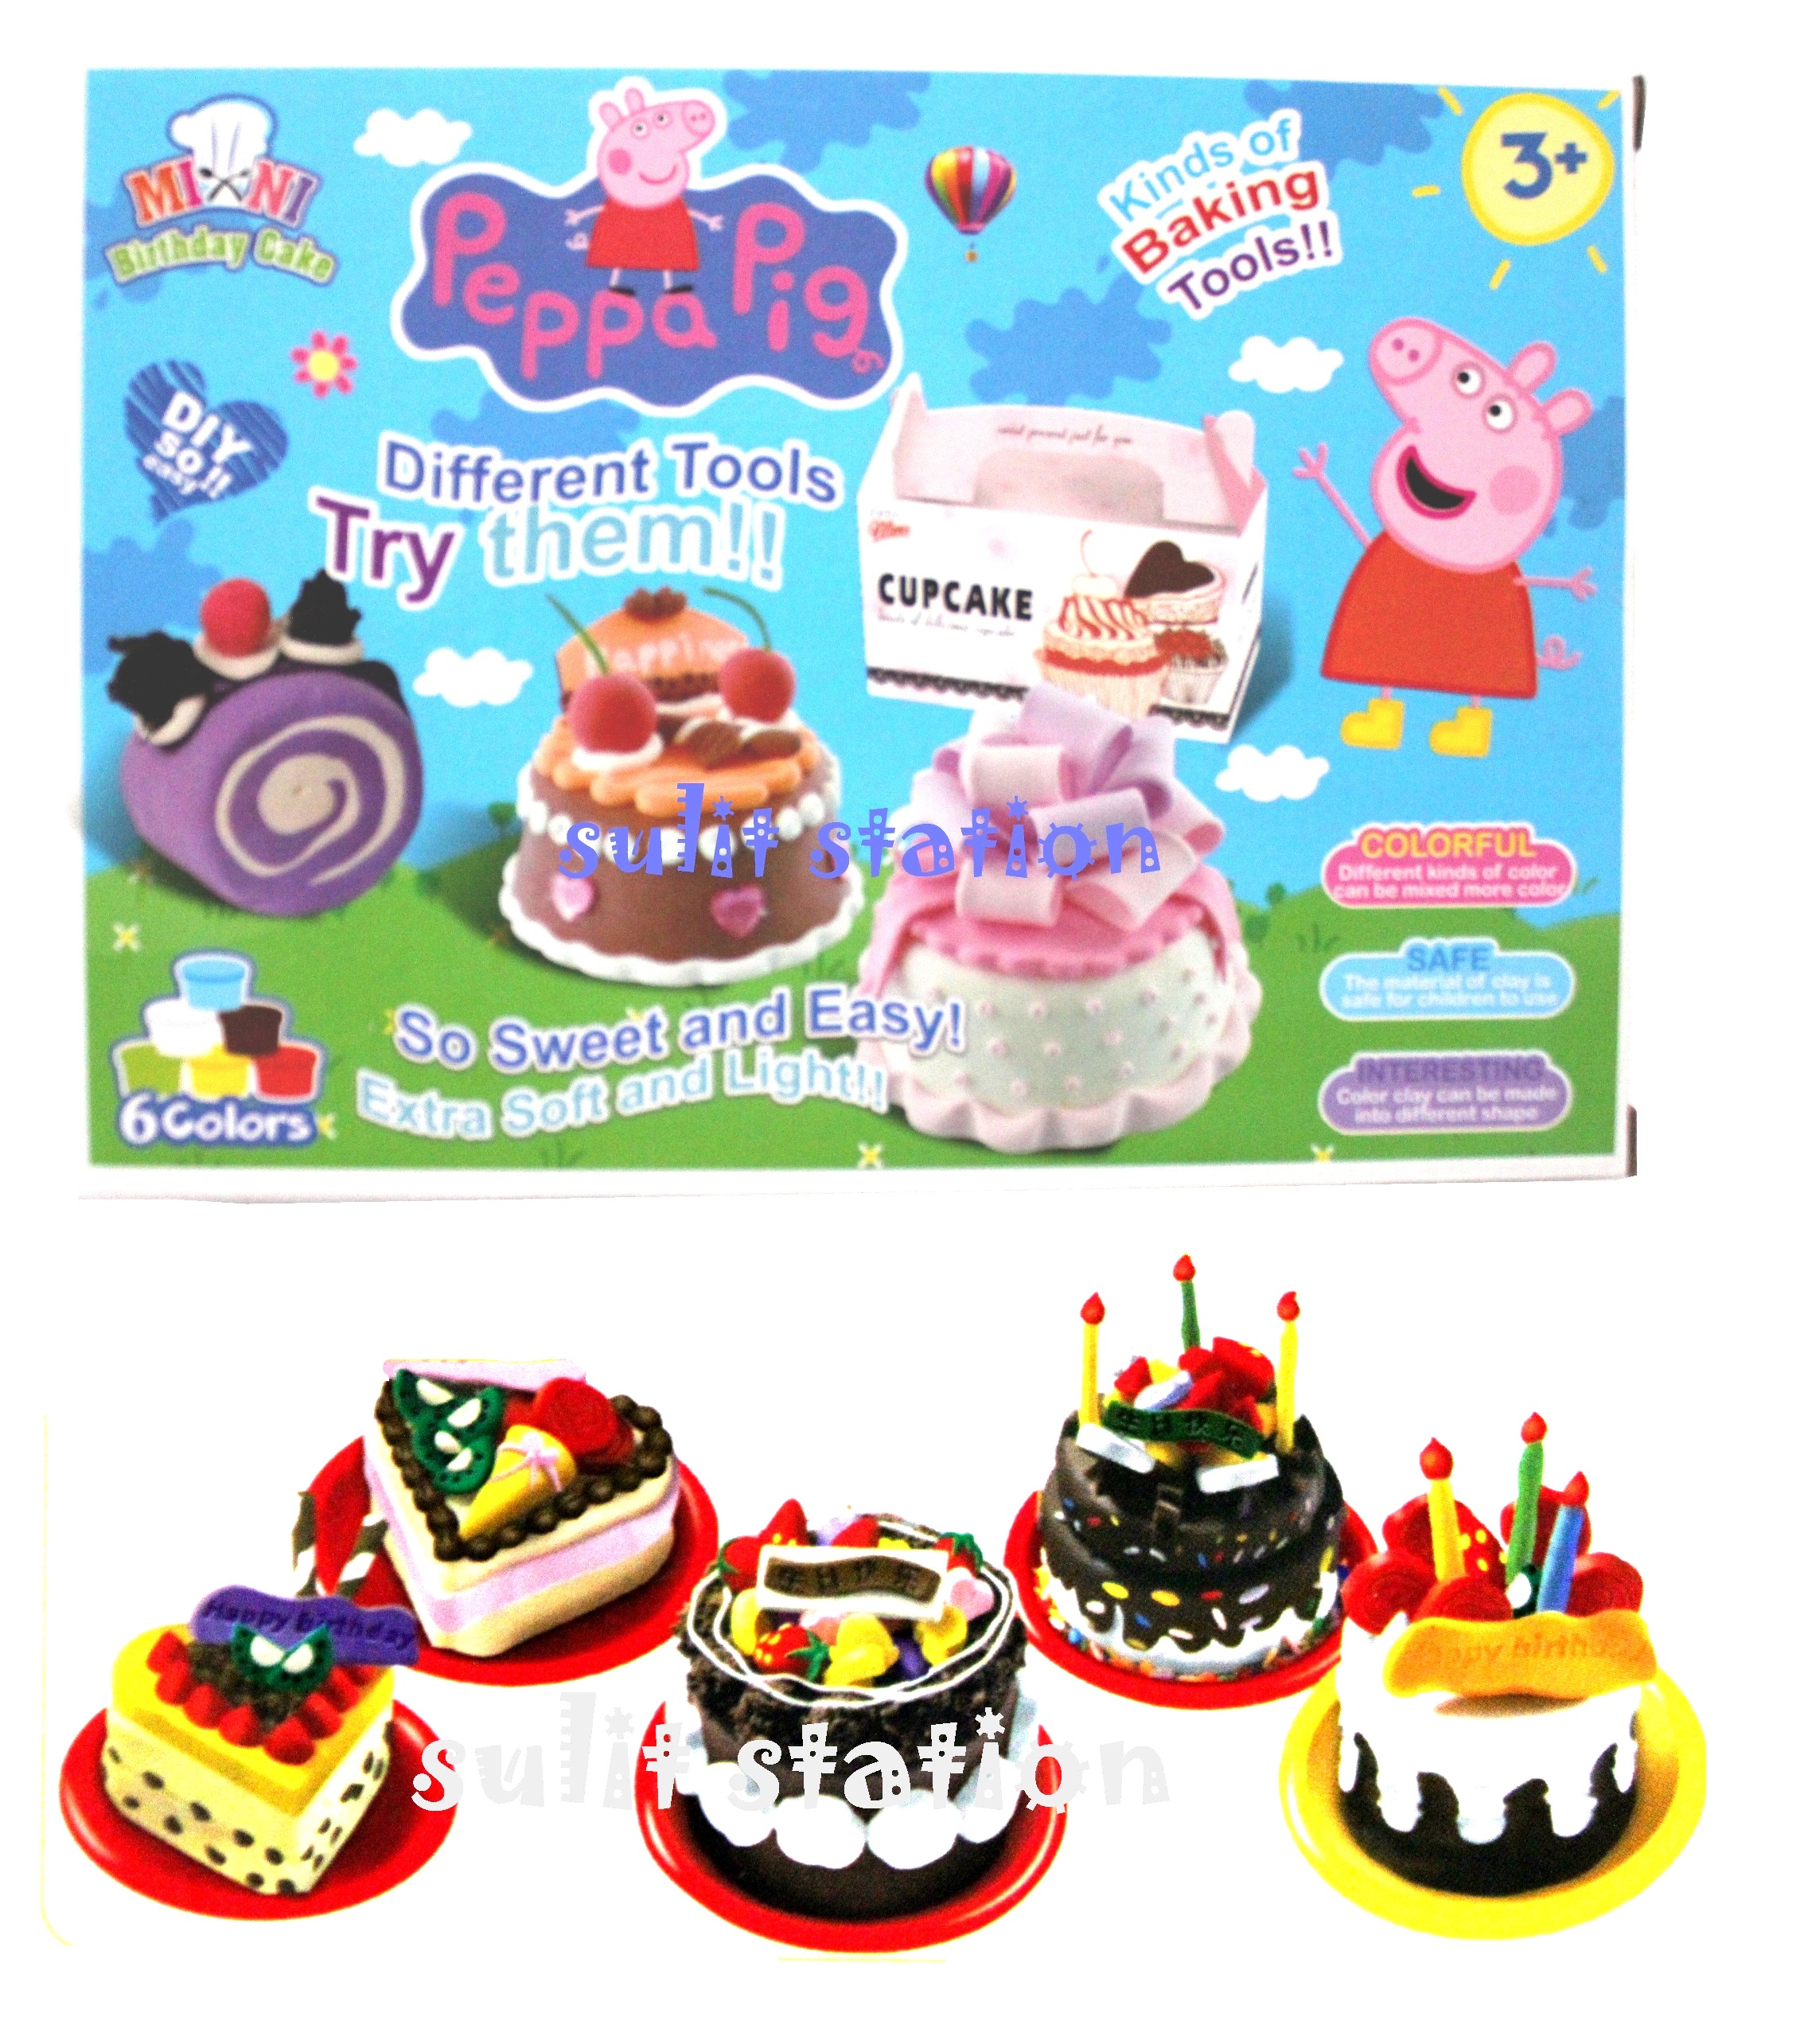 Fondant! The Play-doh of Cake Decorating - JordanCon